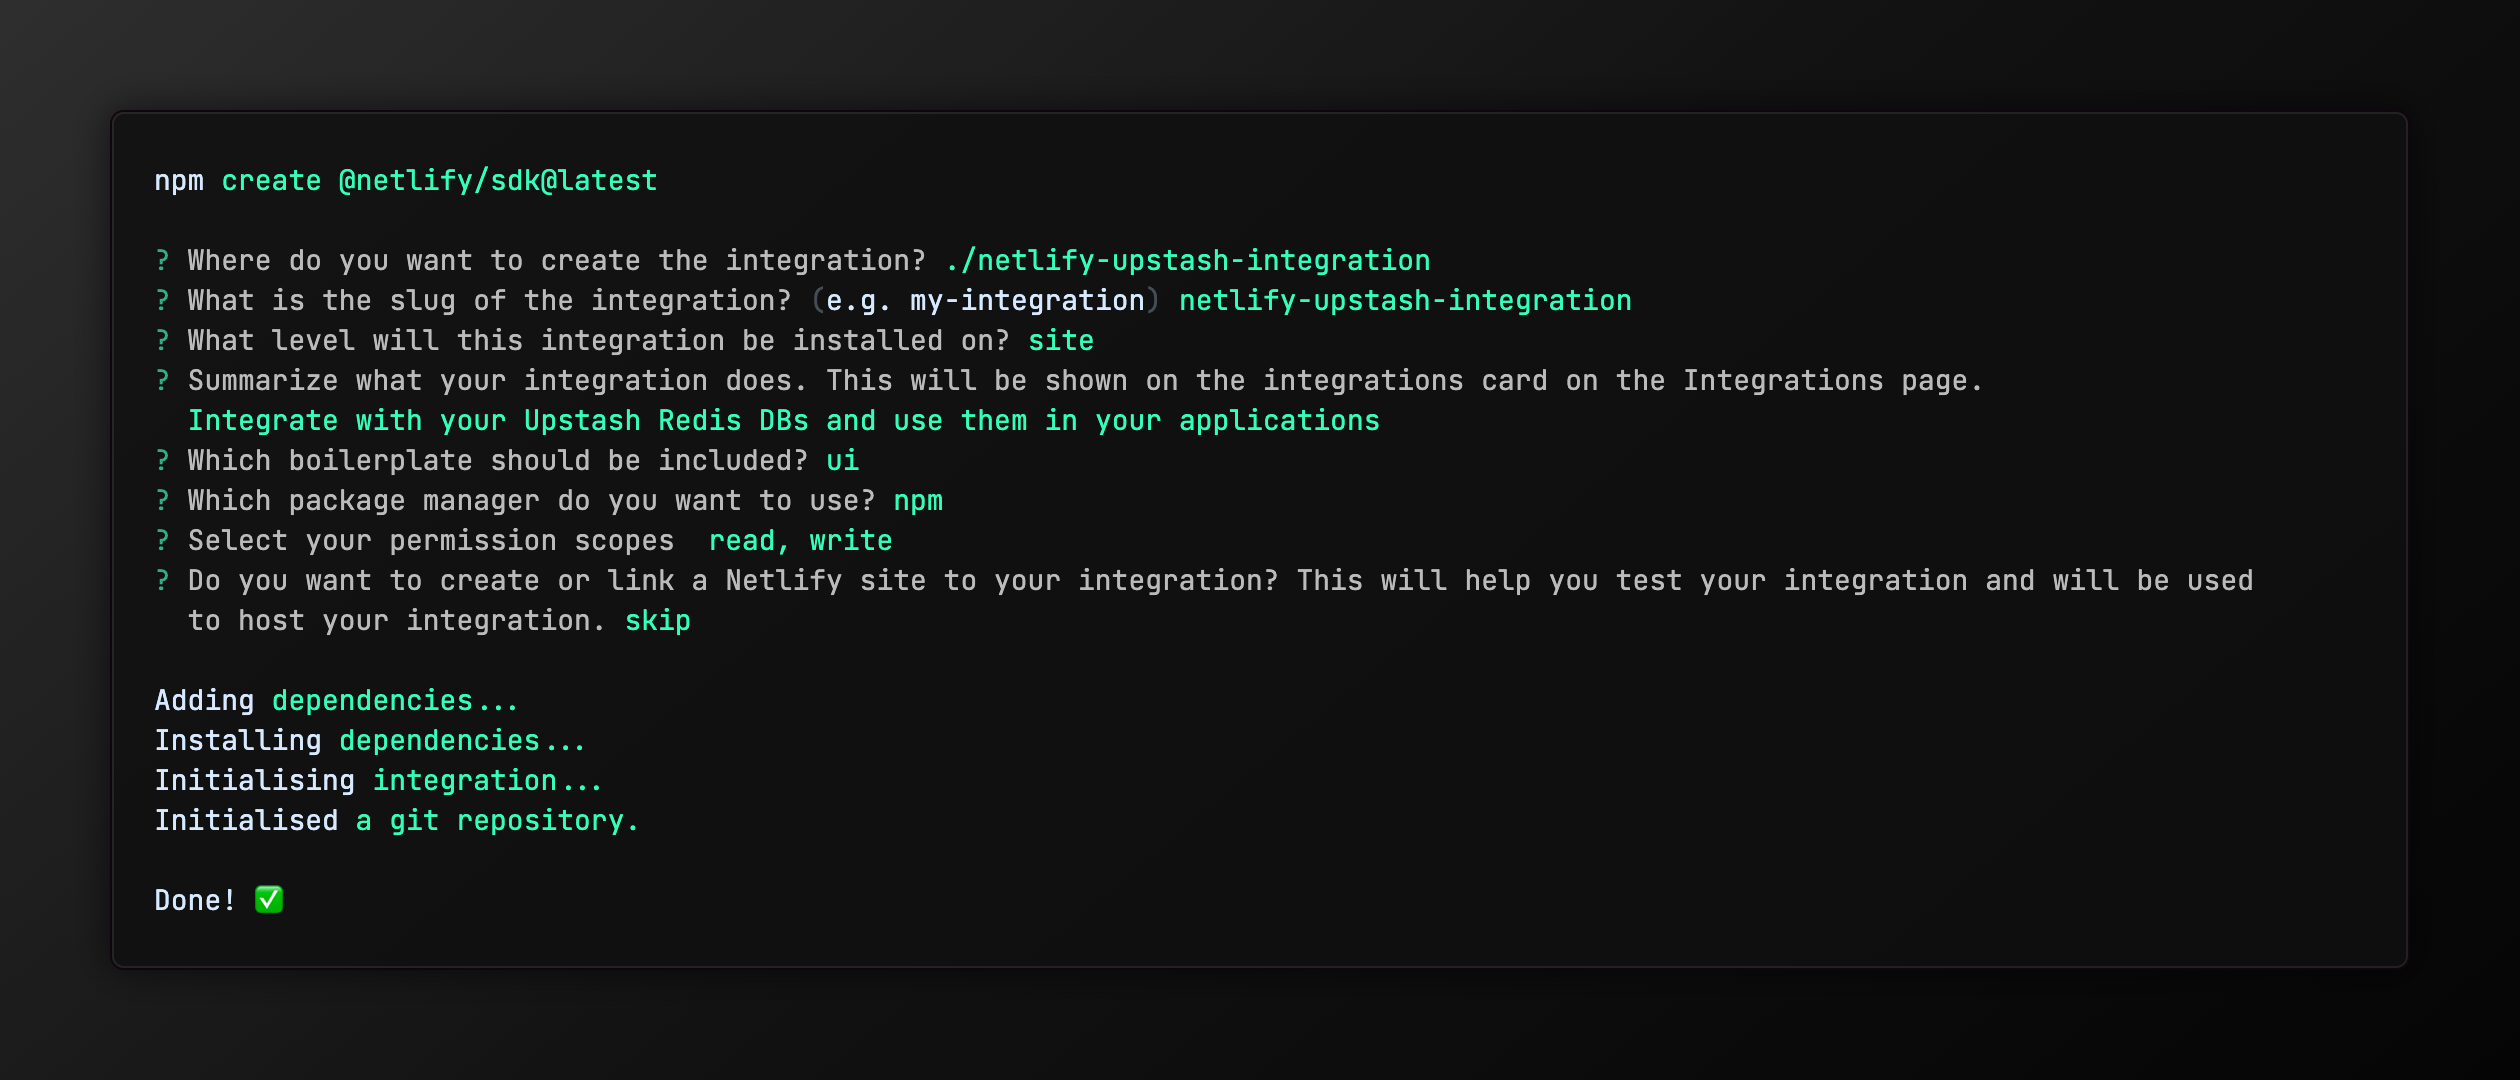 Creating an integration via the Netlify SDK